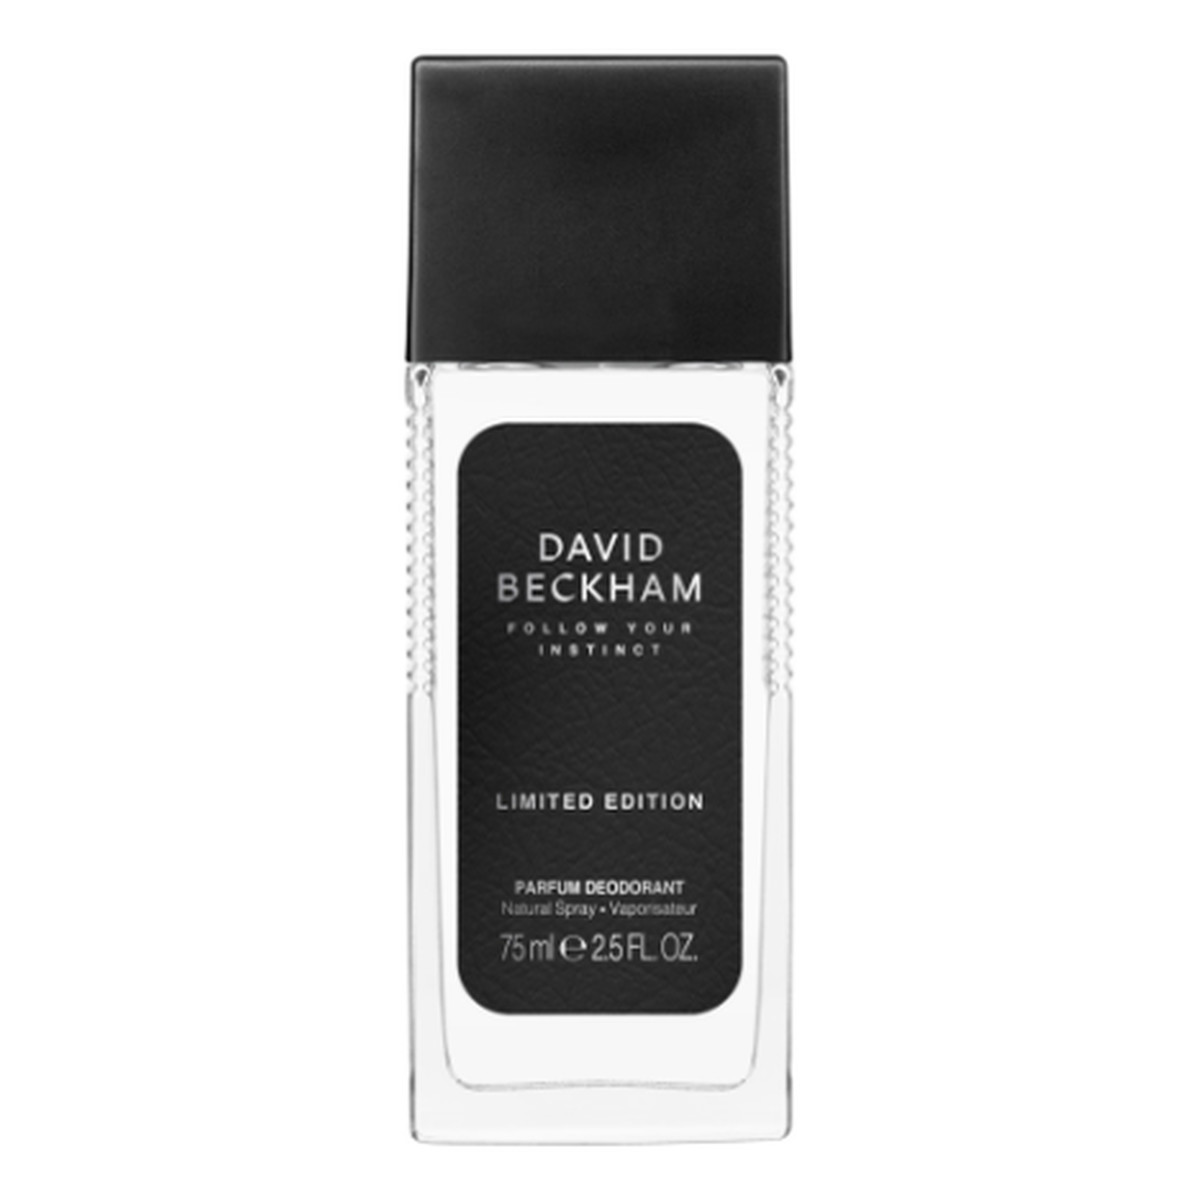 David Beckham Follow Your Instinct dezodorant perfumowany 75ml